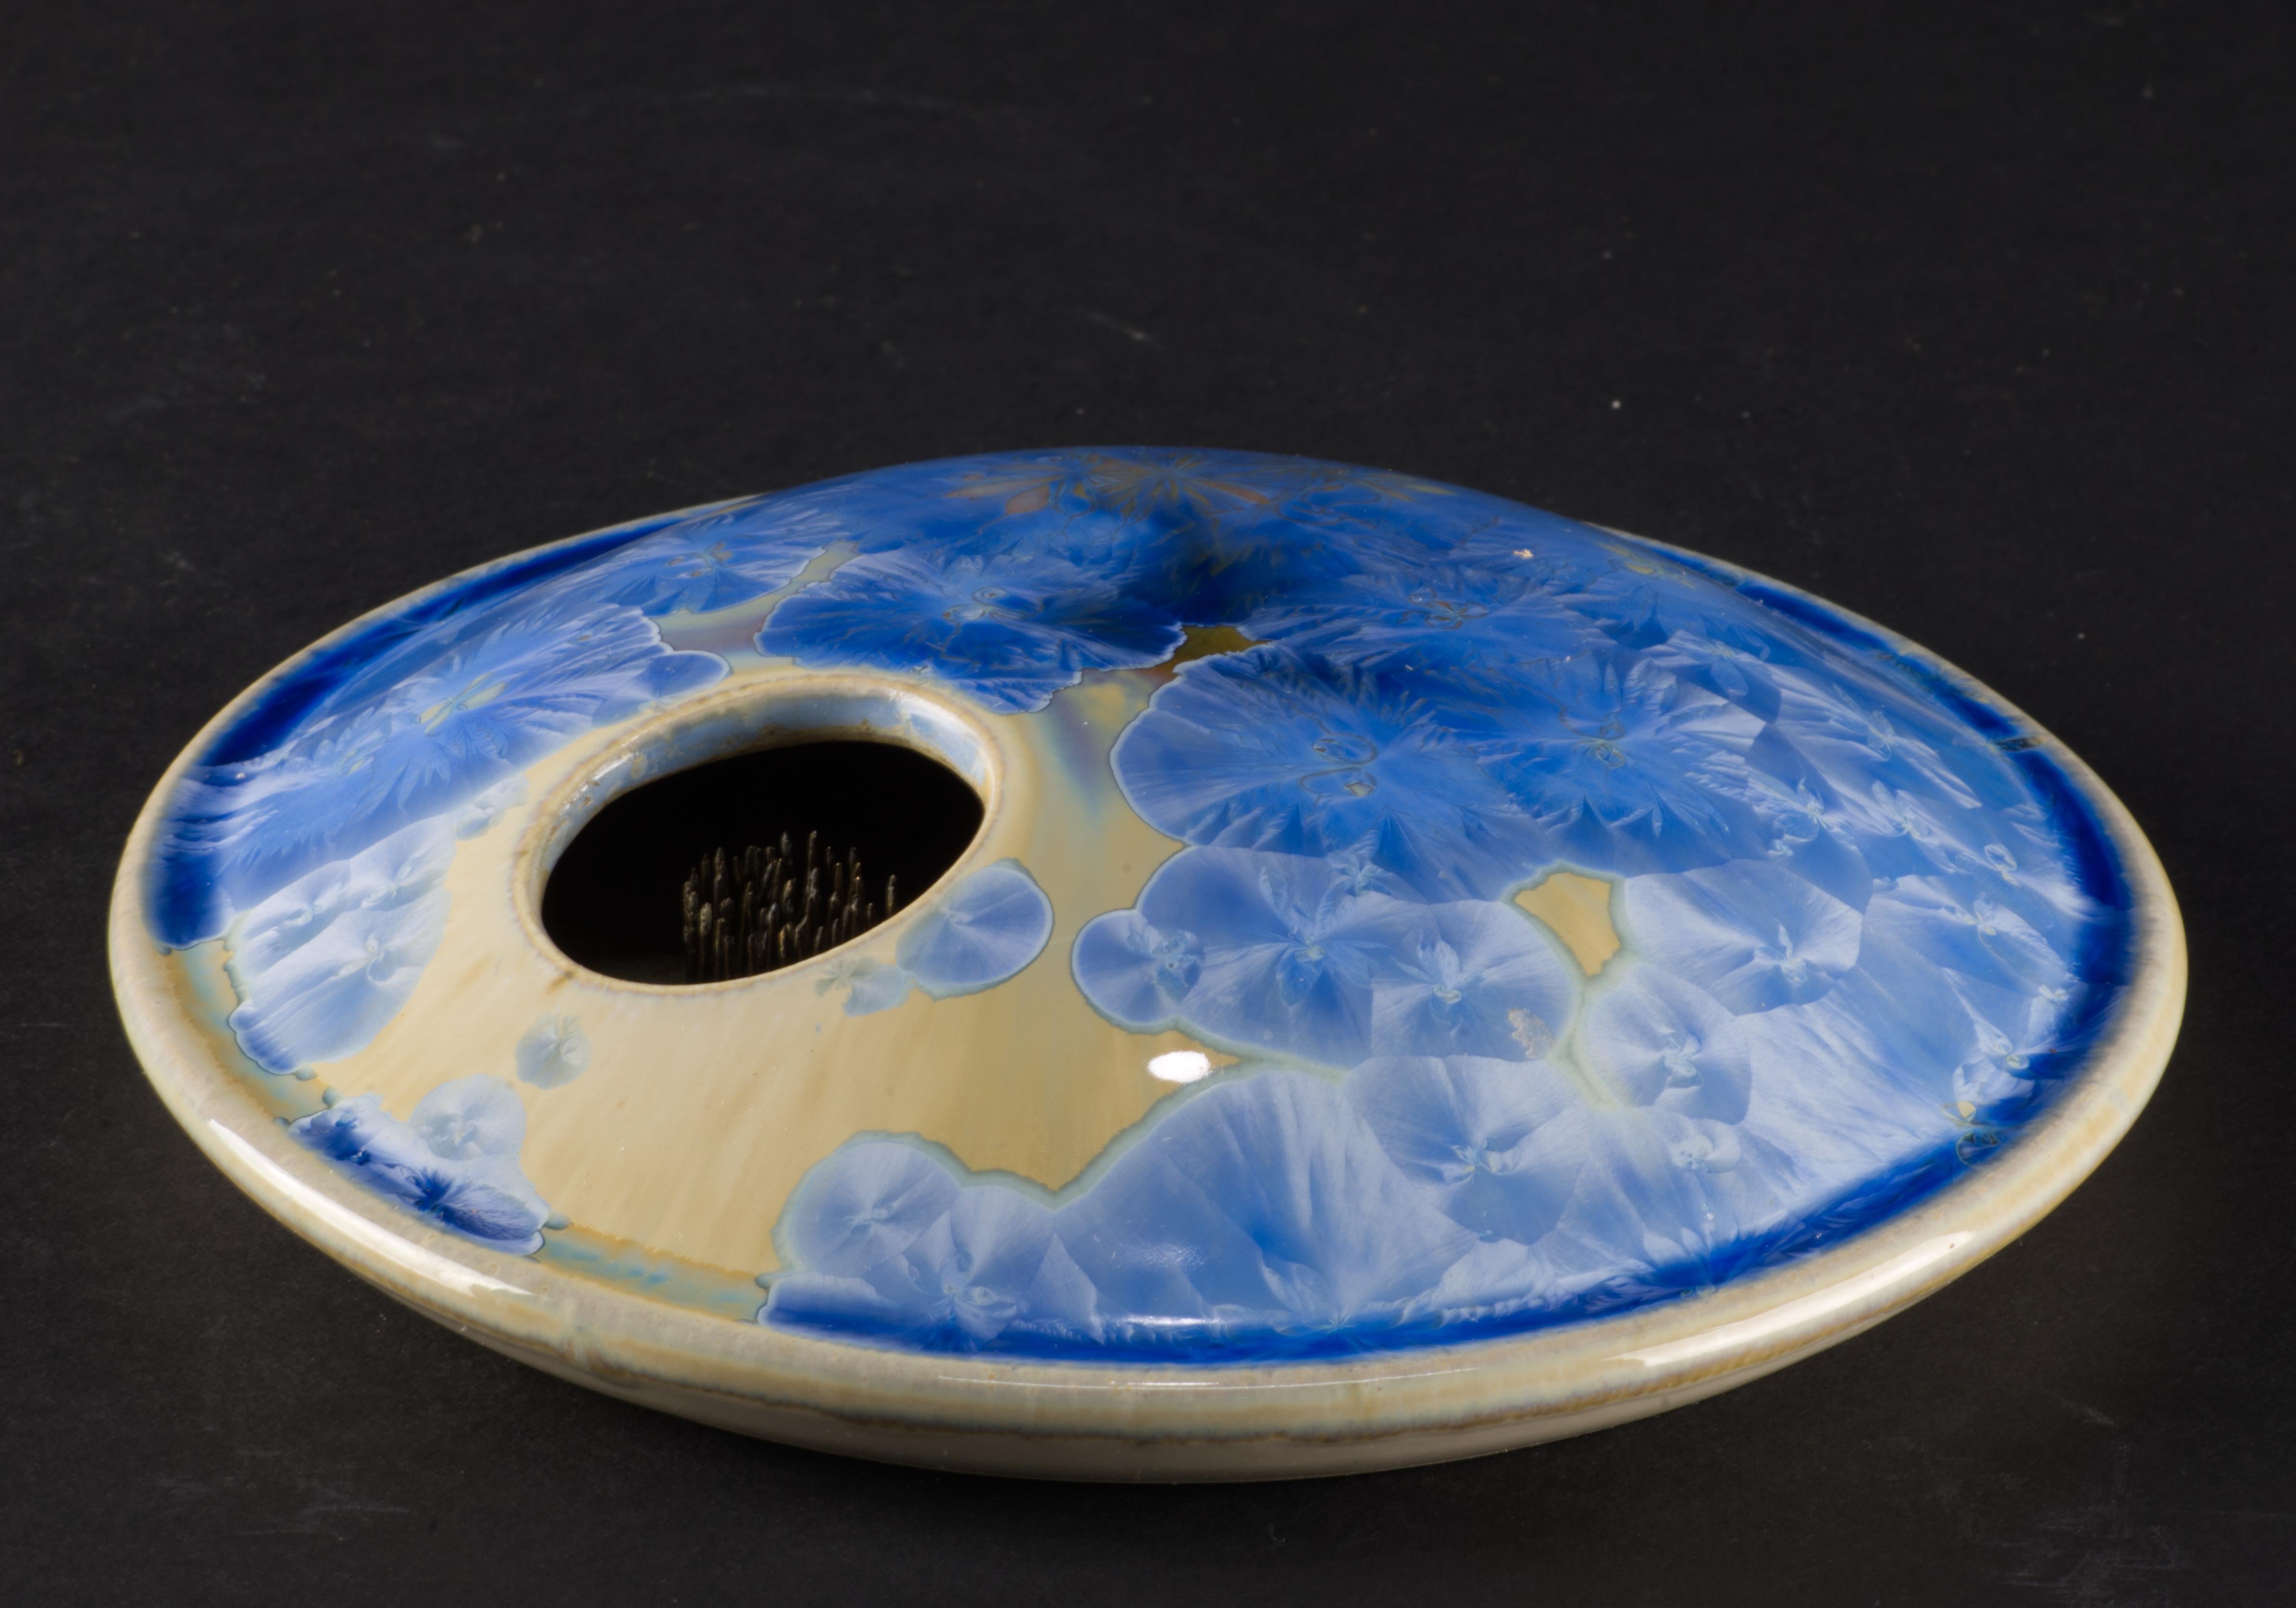 20th Century Crystalline Glaze Ceramic Ikebana Vase, Blue, American Studio Pottery, 2003 For Sale